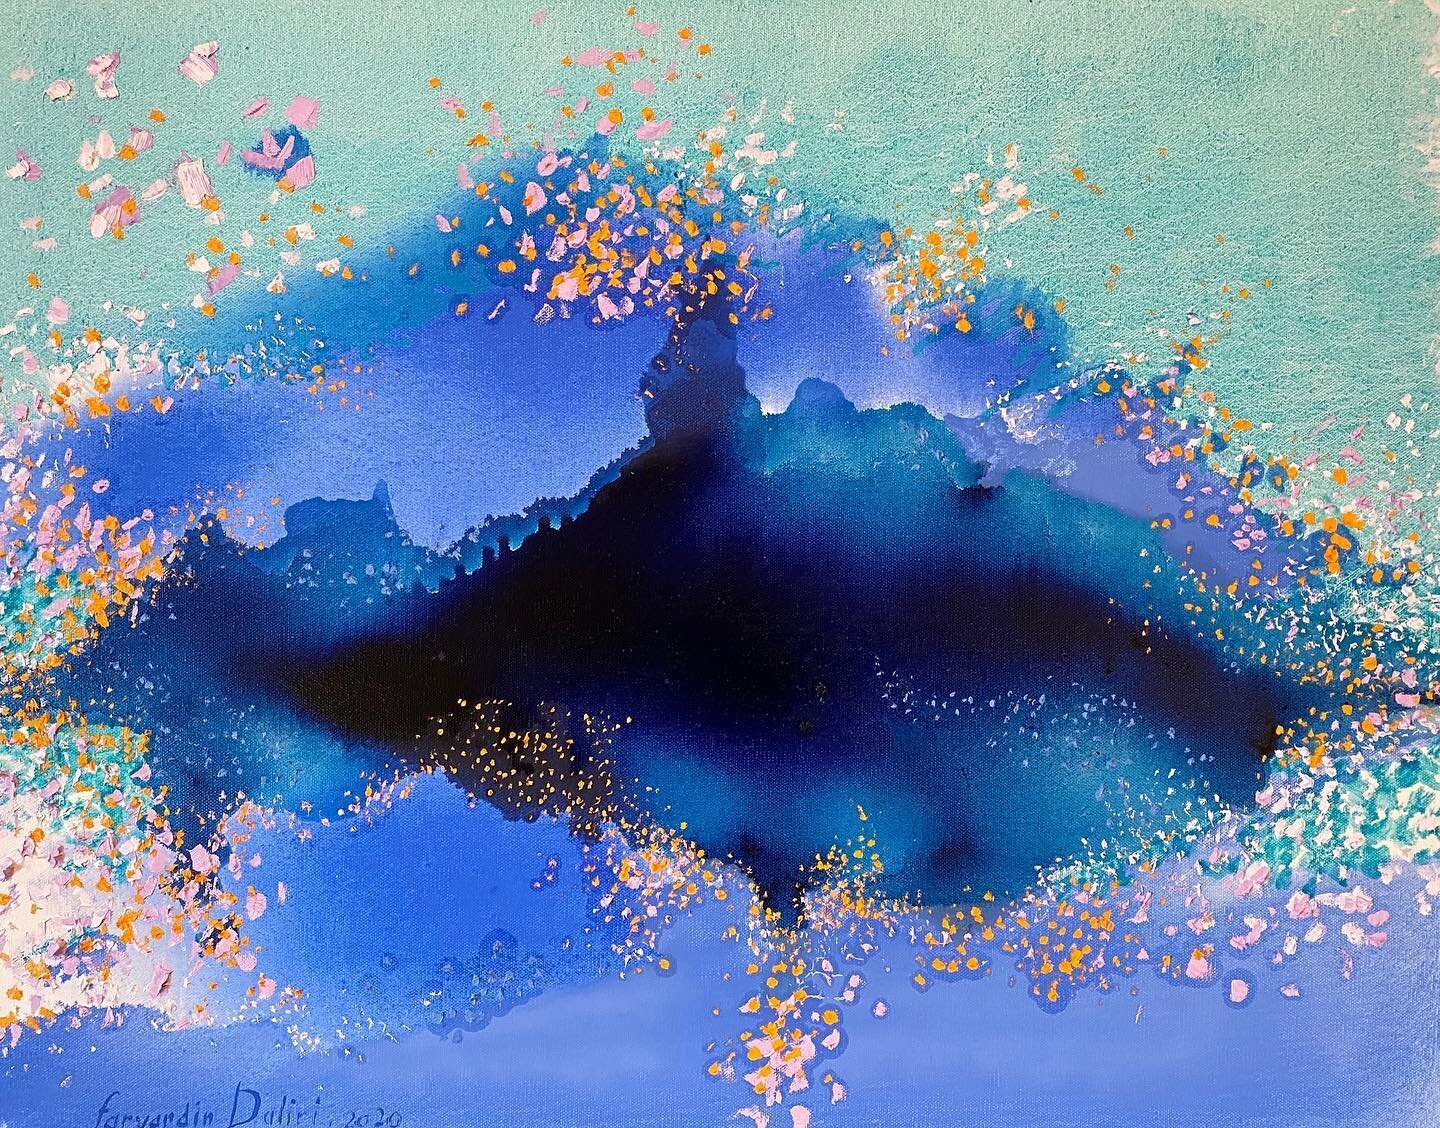 Titled: The Glorious Space. Oil on canvas. #art #artforsale #artist #farvardindaliri #deepthoughts #deepspace  www.farvardindaliri.com